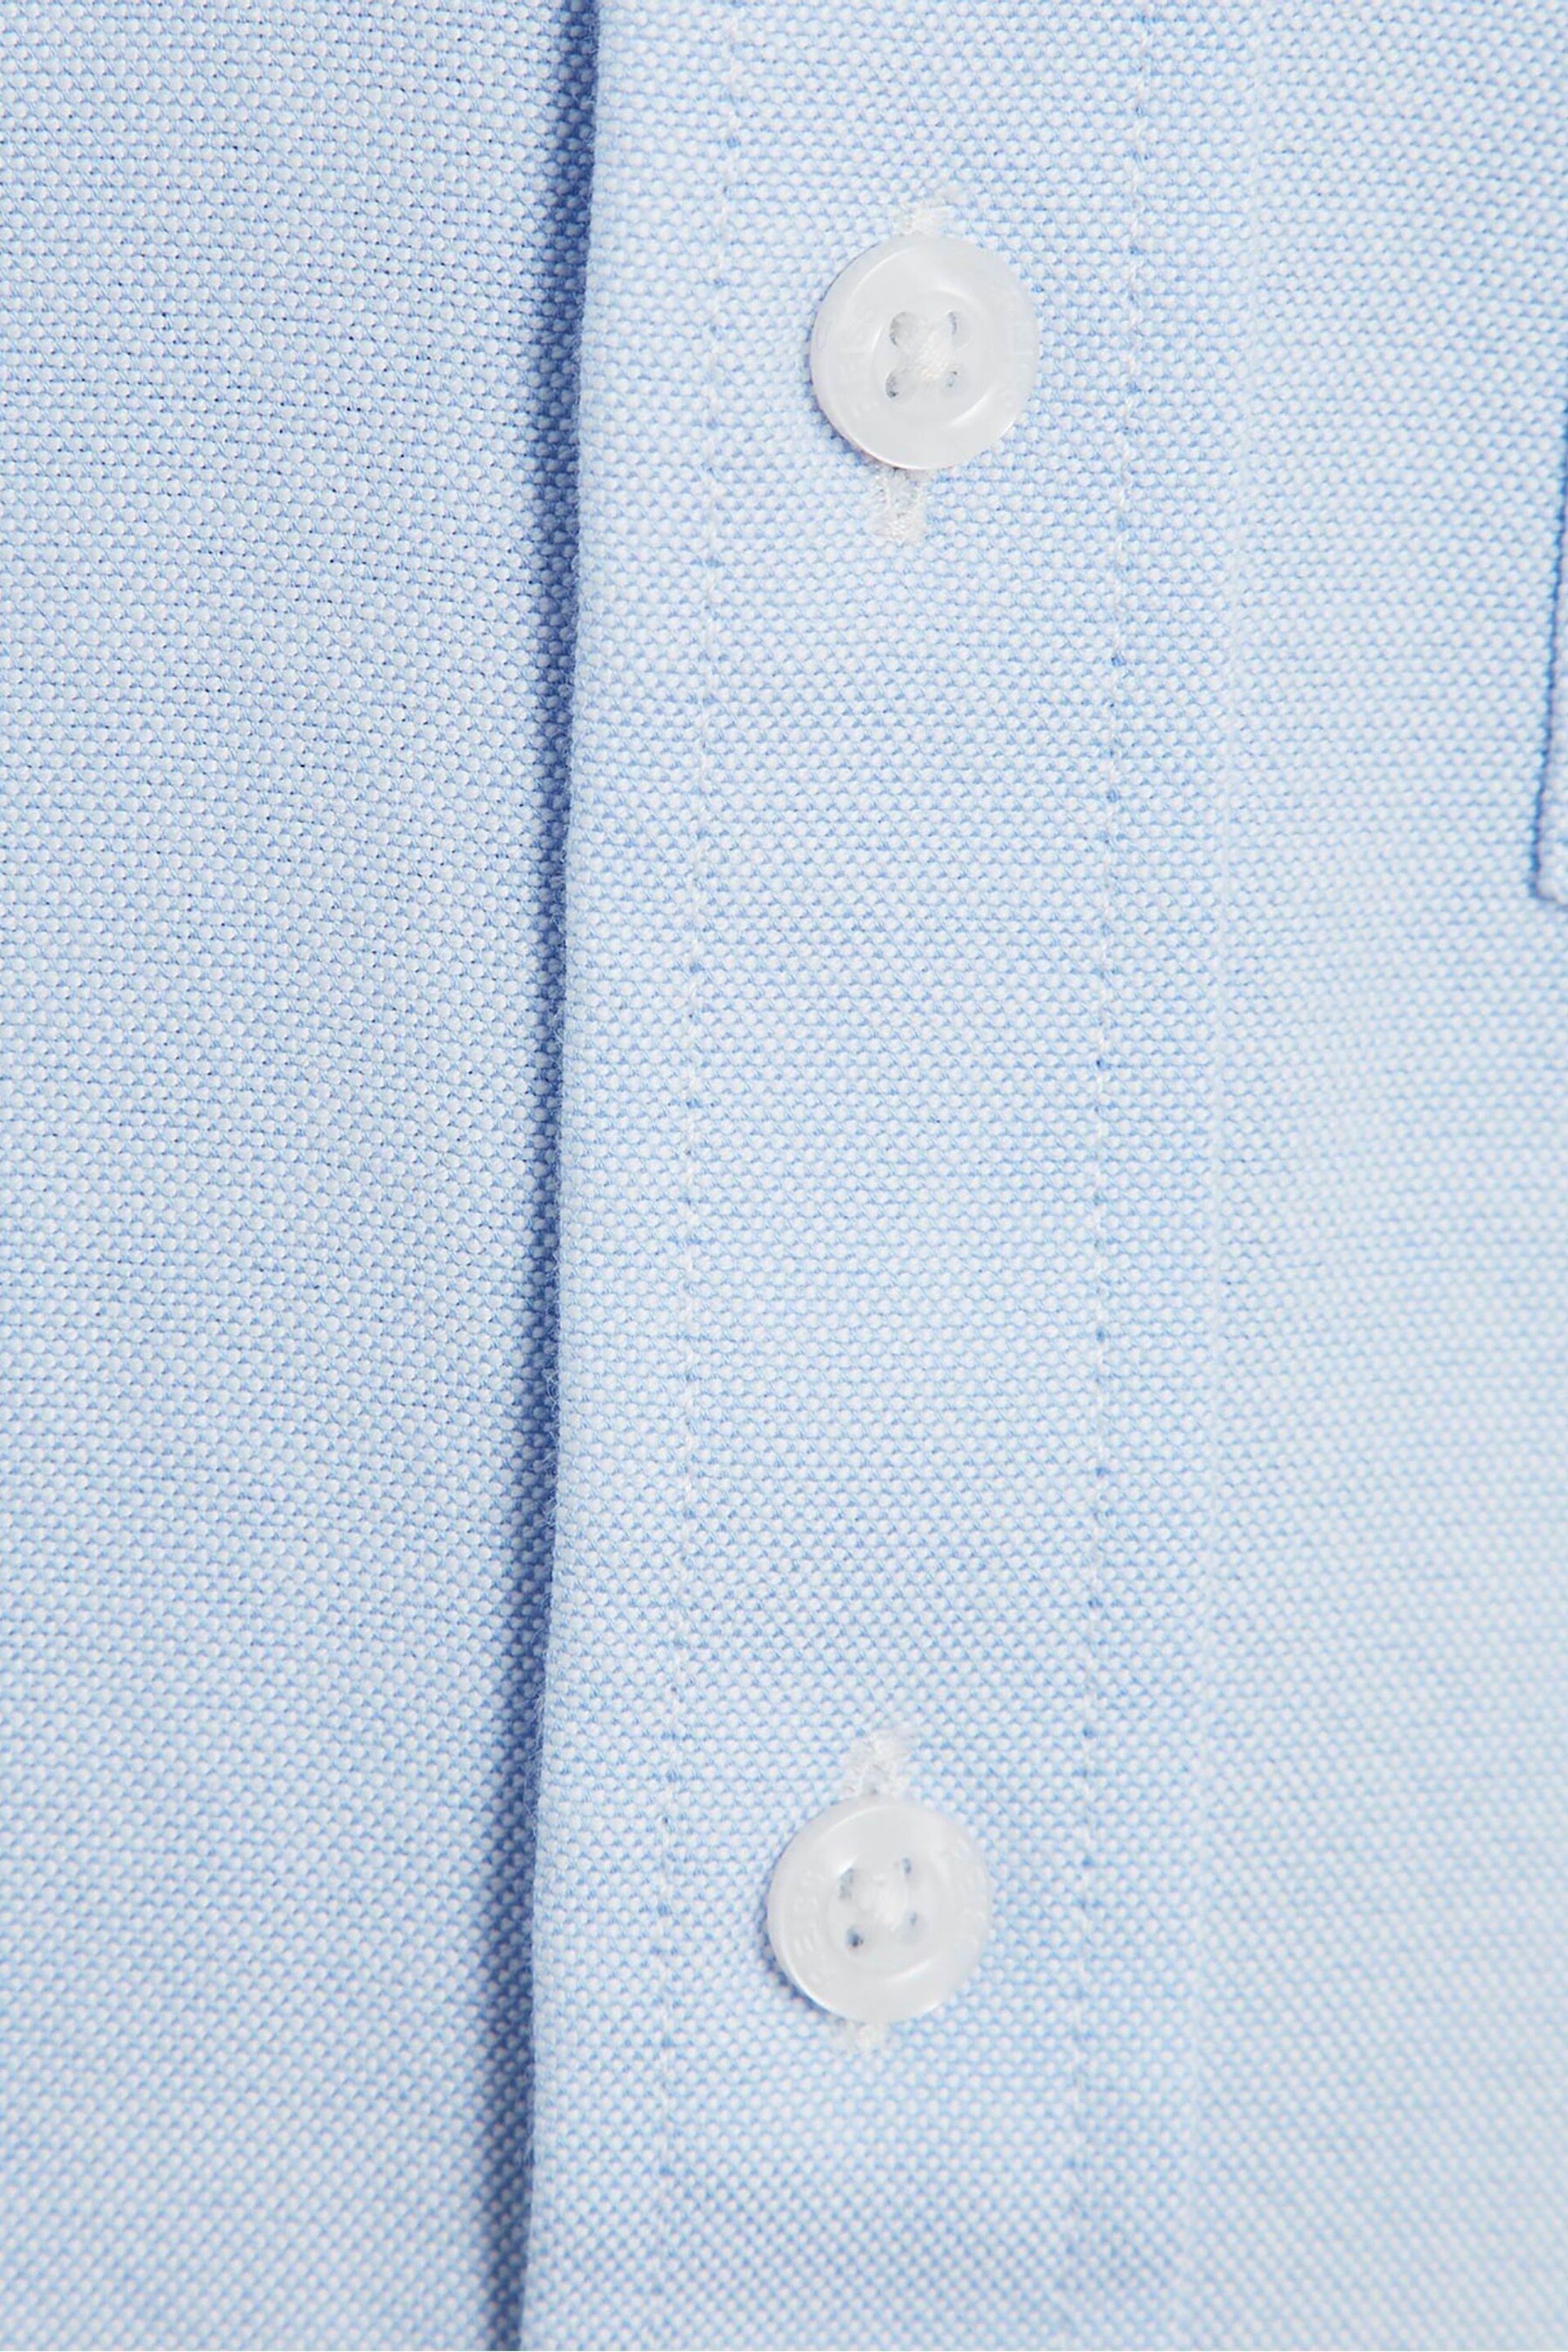 Reiss Soft Blue Greenwich Senior Slim Fit Button-Down Oxford Shirt - Image 6 of 6